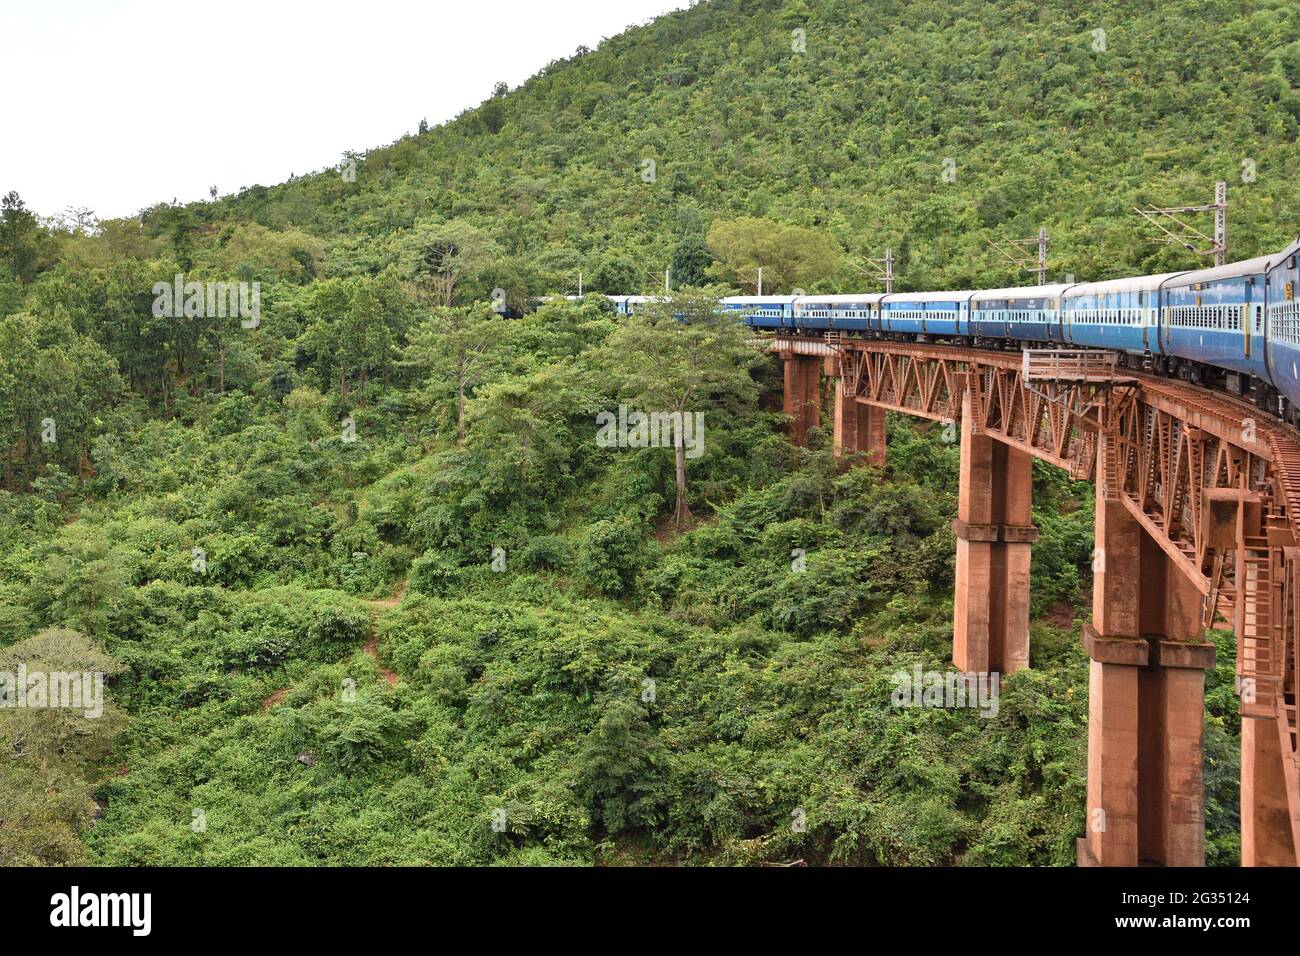 Indian Railways Zug Kirandul Passenger läuft durch Araku Valley, Andhra Pradesh, Indien Stockfoto